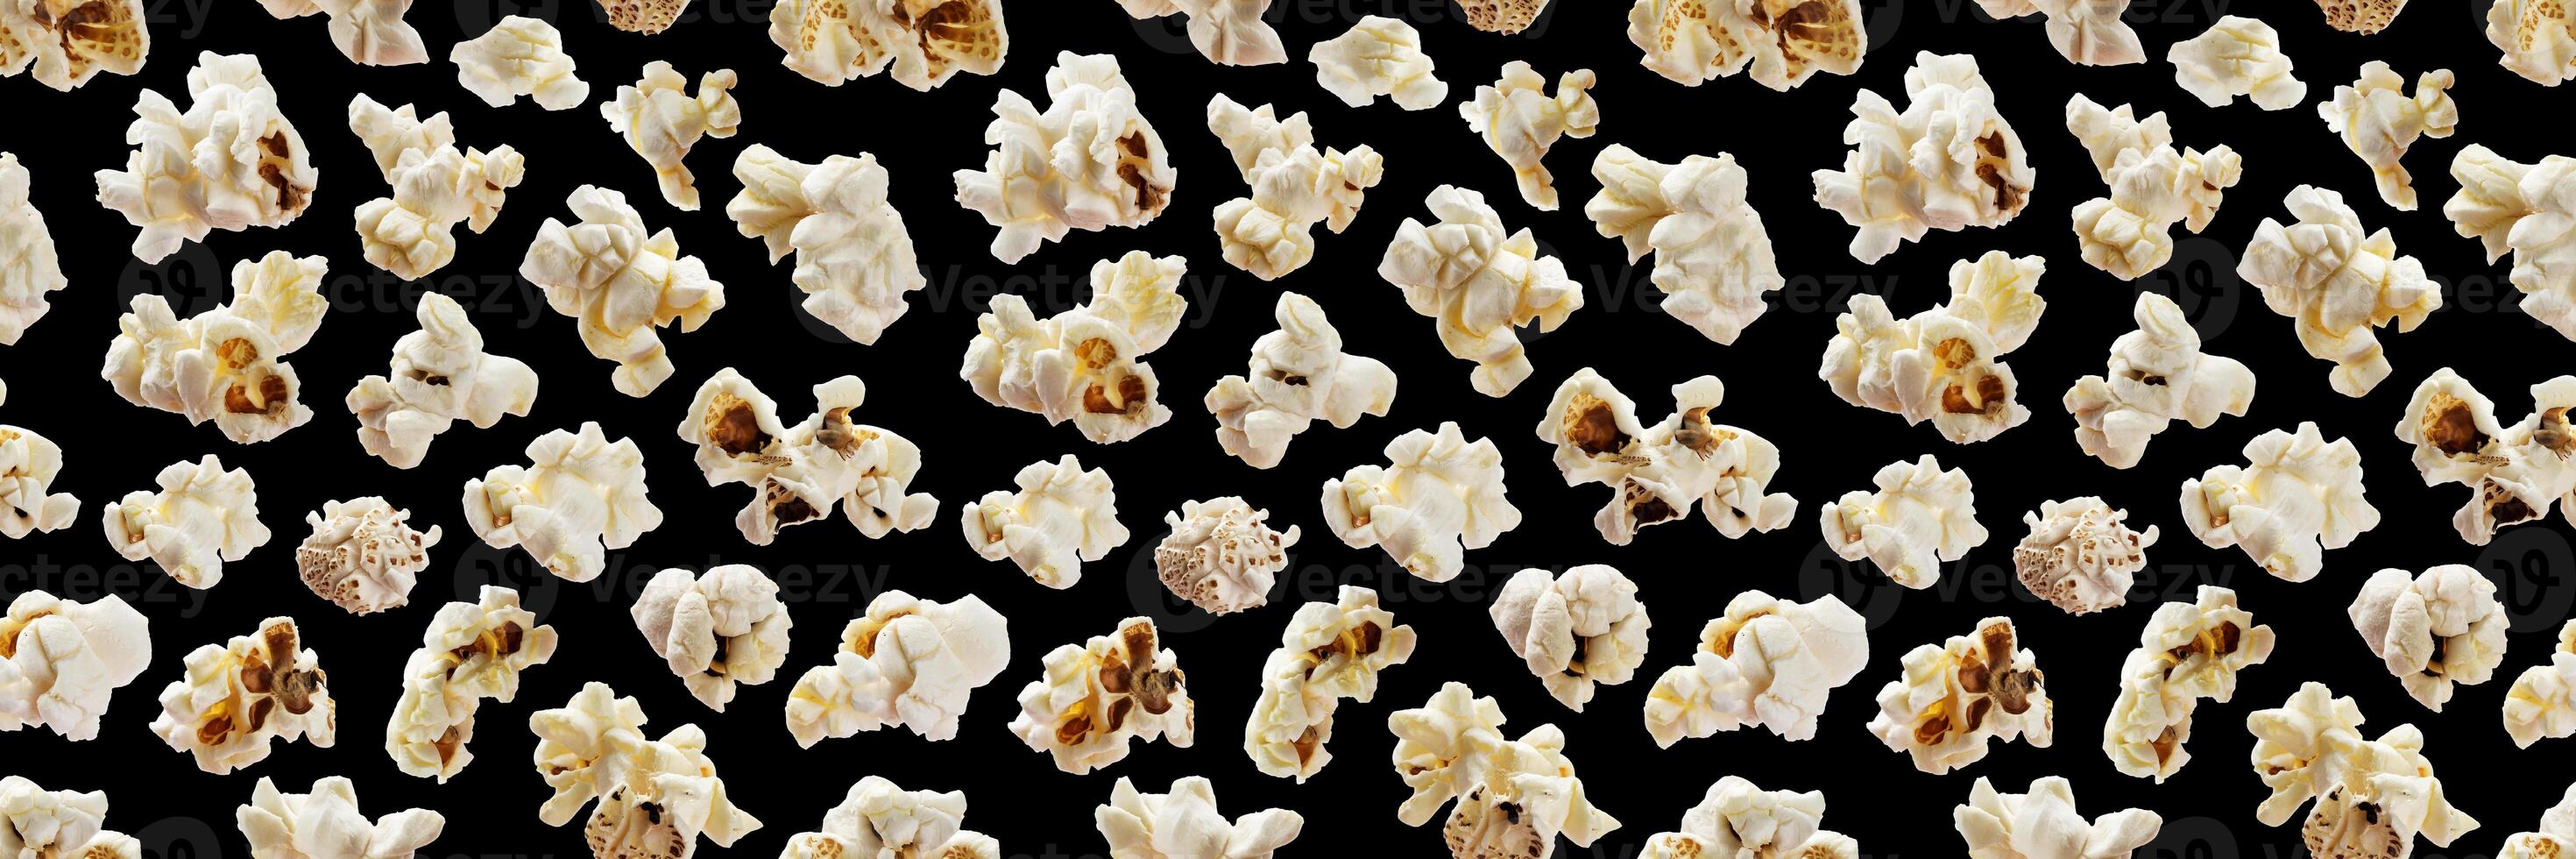 popcorn naadloos patroon. knal maïs Aan zwart achtergrond foto